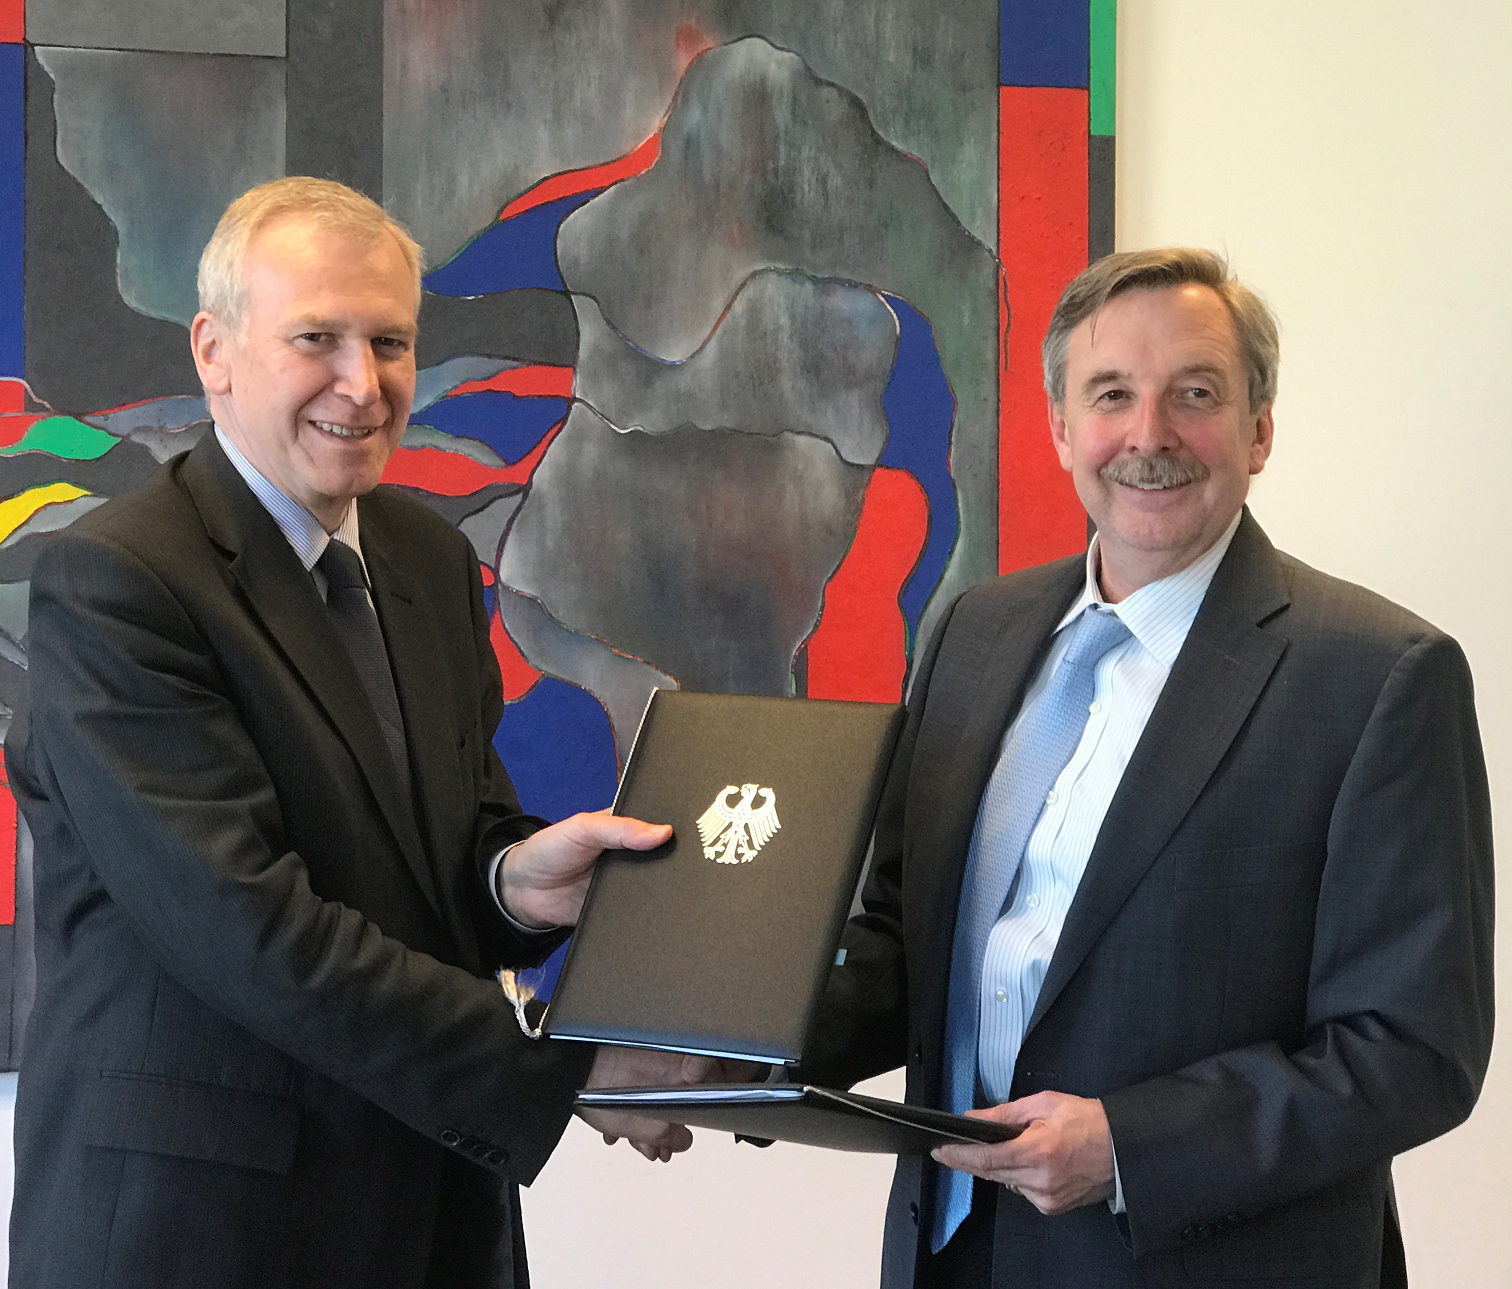 Hans-Jürgen Heimsoeth, German Ambassador to Sweden and Yves Leterme, Secretary-General of International IDEA, signed an agreement to work together on Yemen.